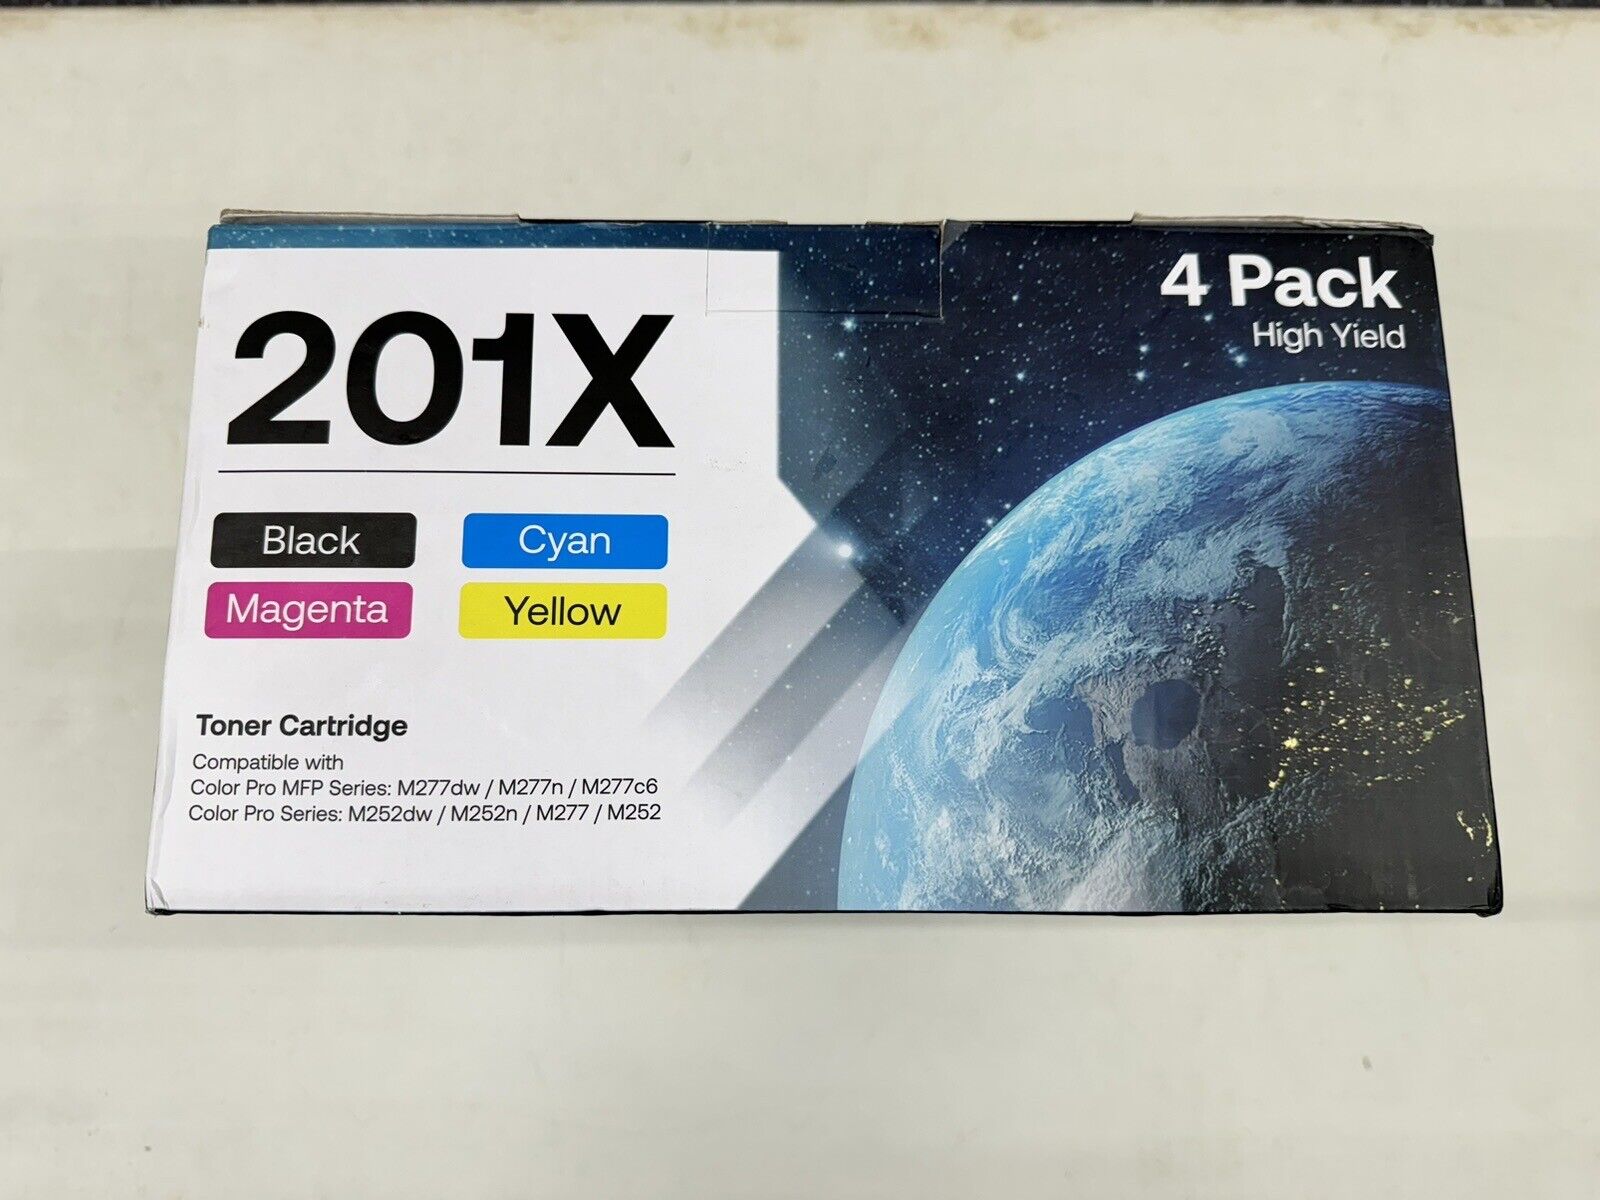 201X Toner Cartridge 4 Pack High Yield Black/Cyan/Magenta/Yellow NEW Printer